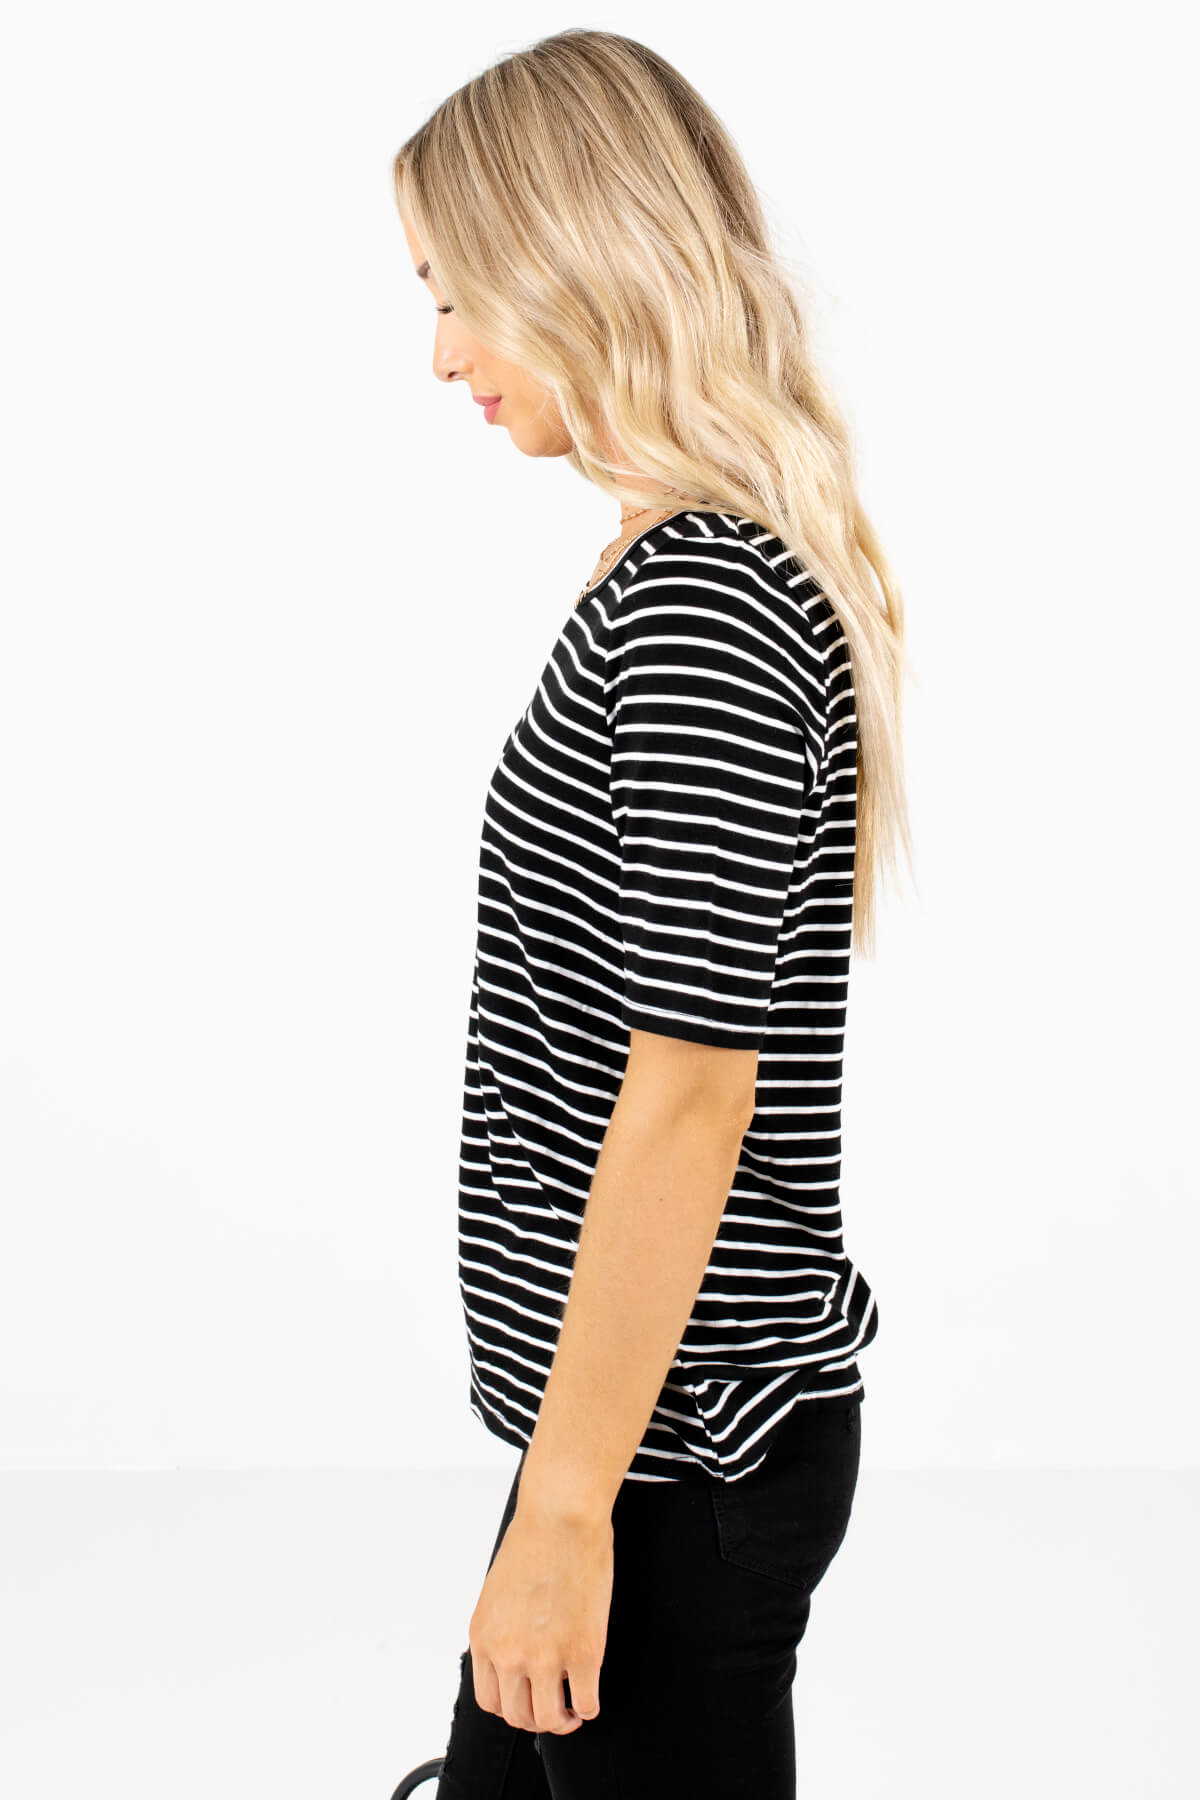 White and Black Striped Round Neckline Boutique Tops for Women